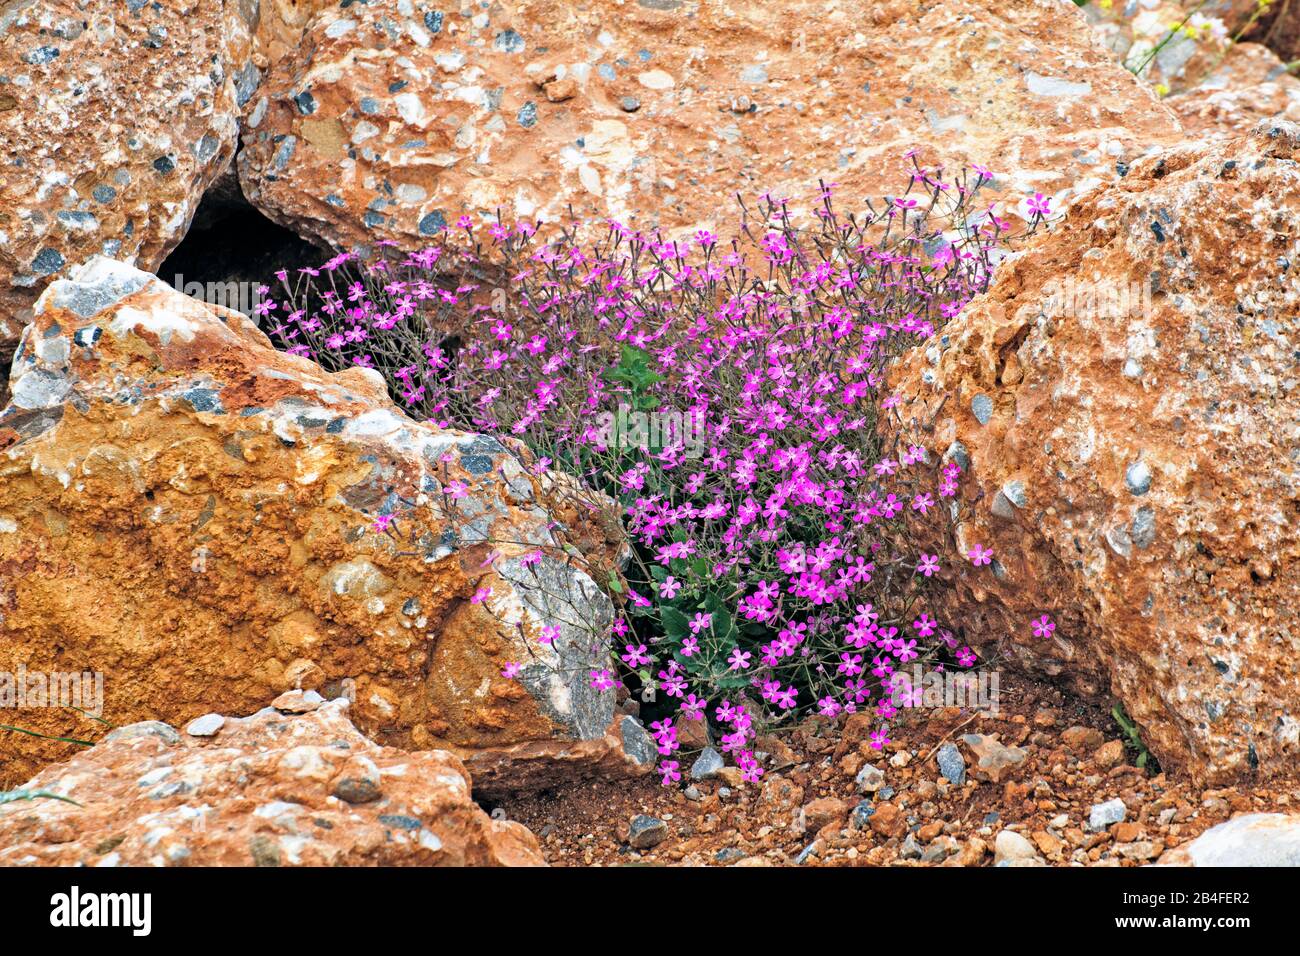 Clove-like mountain flower, Arcadia, Greece Stock Photo